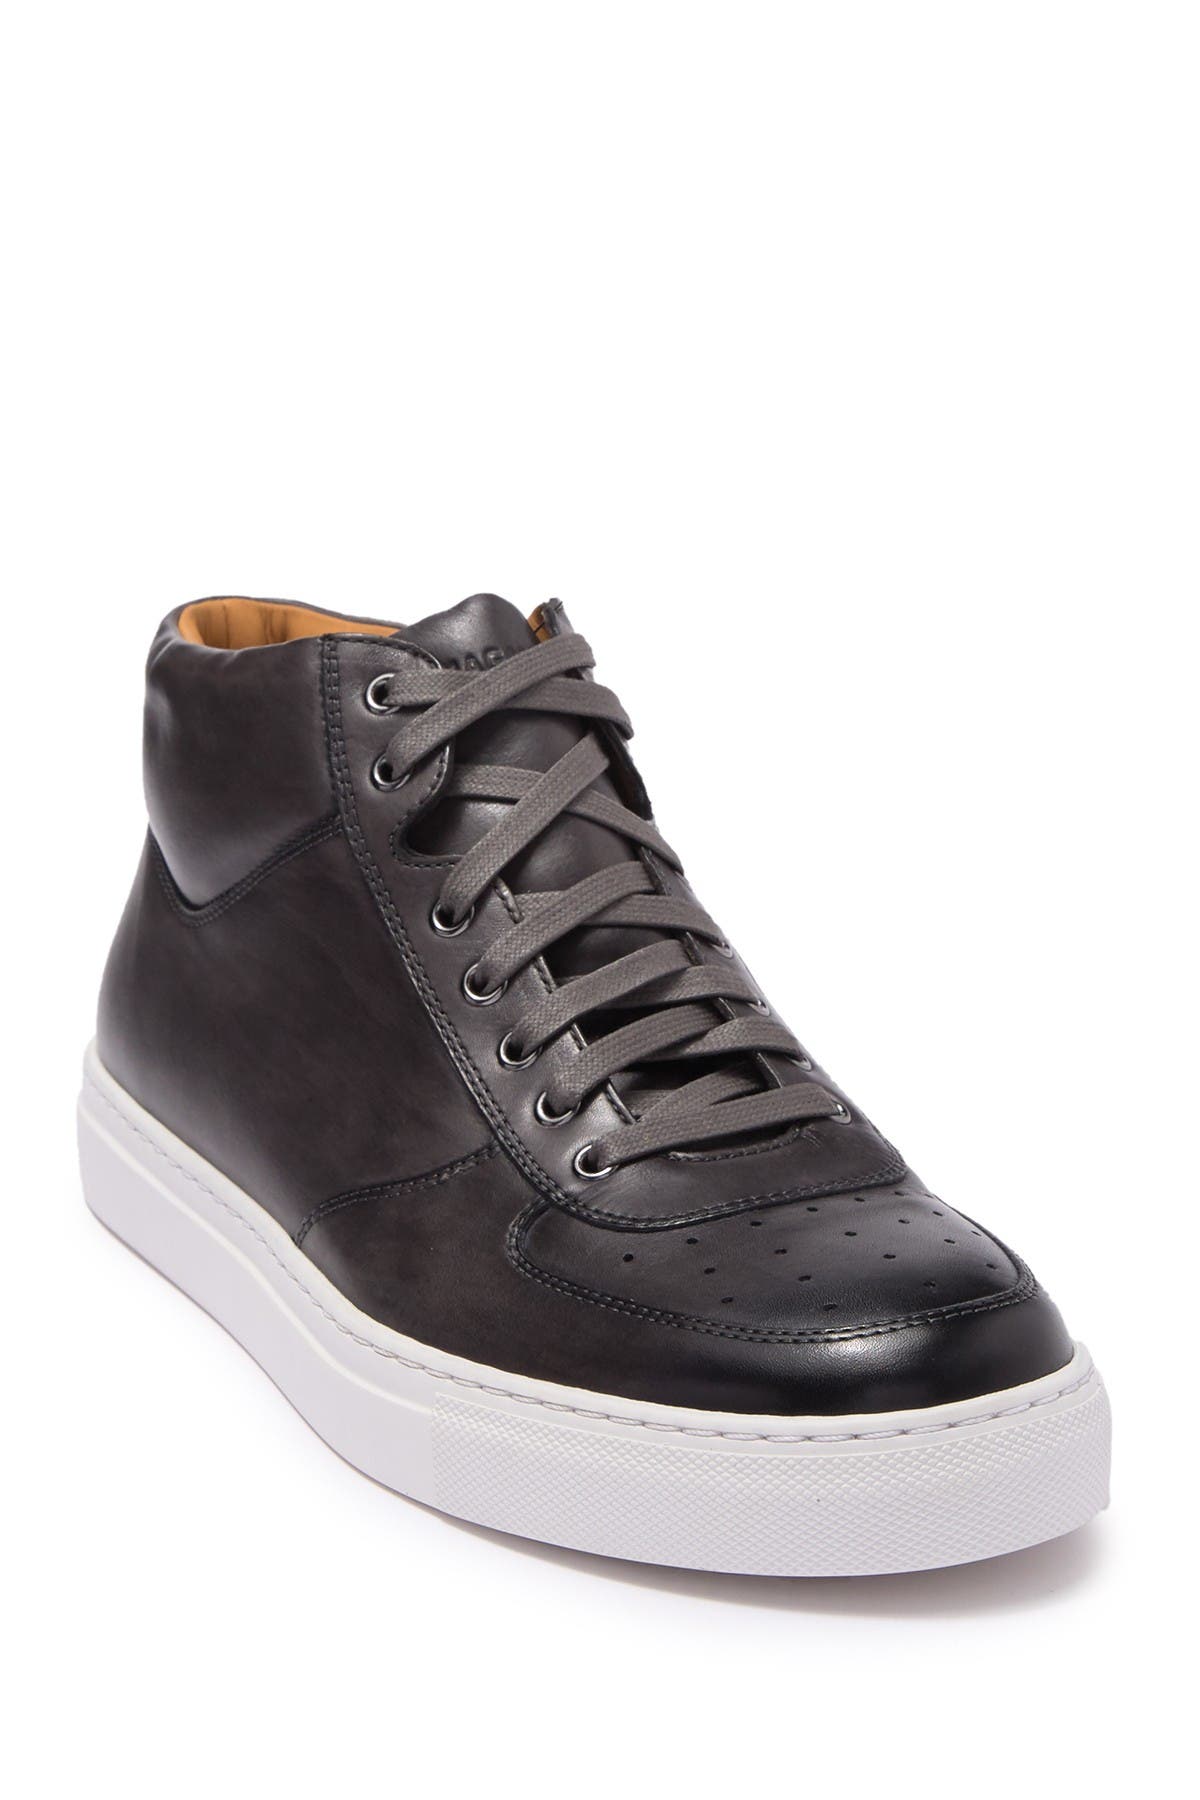 magnanni sneakers grey